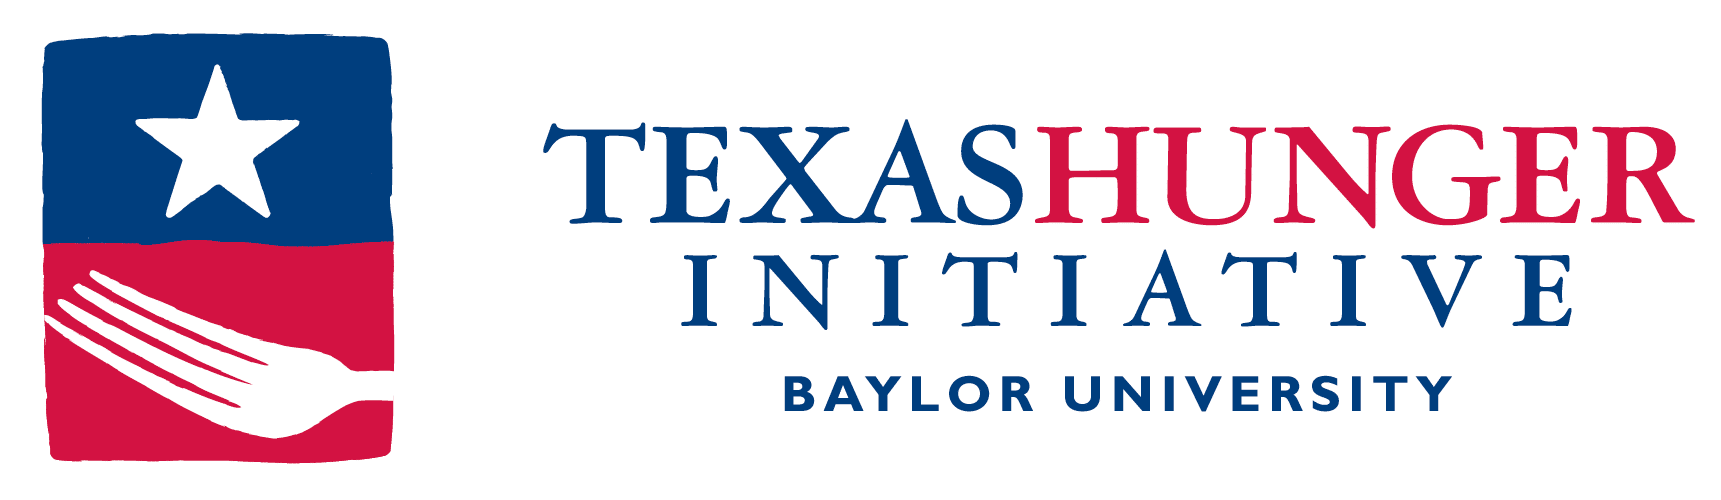 Texas Hunger Initiative logo